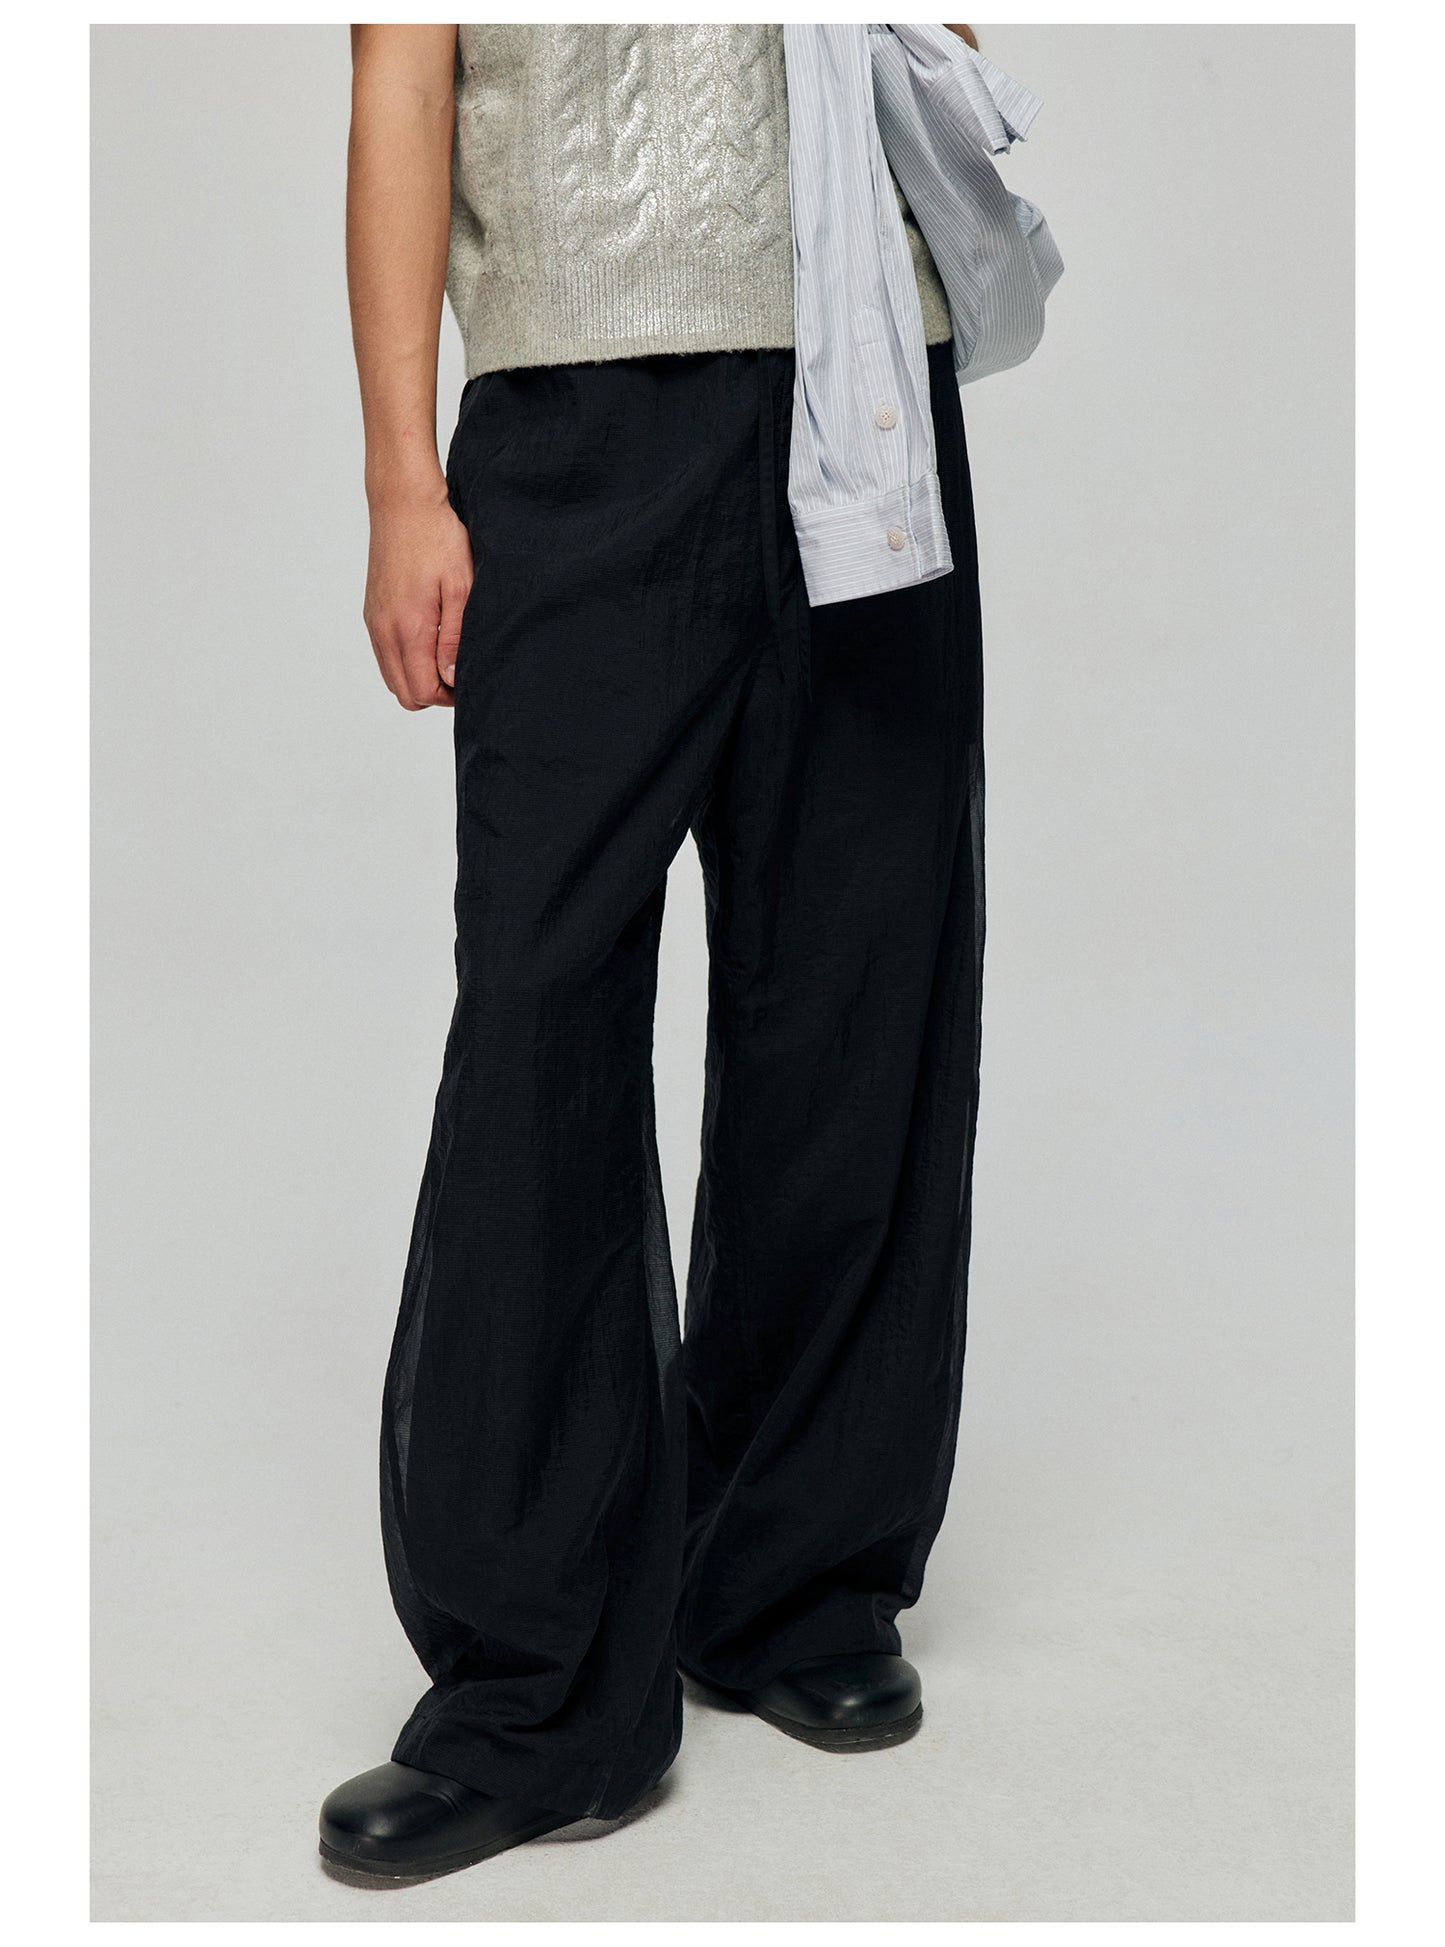 Nylon 2-layer casual pants